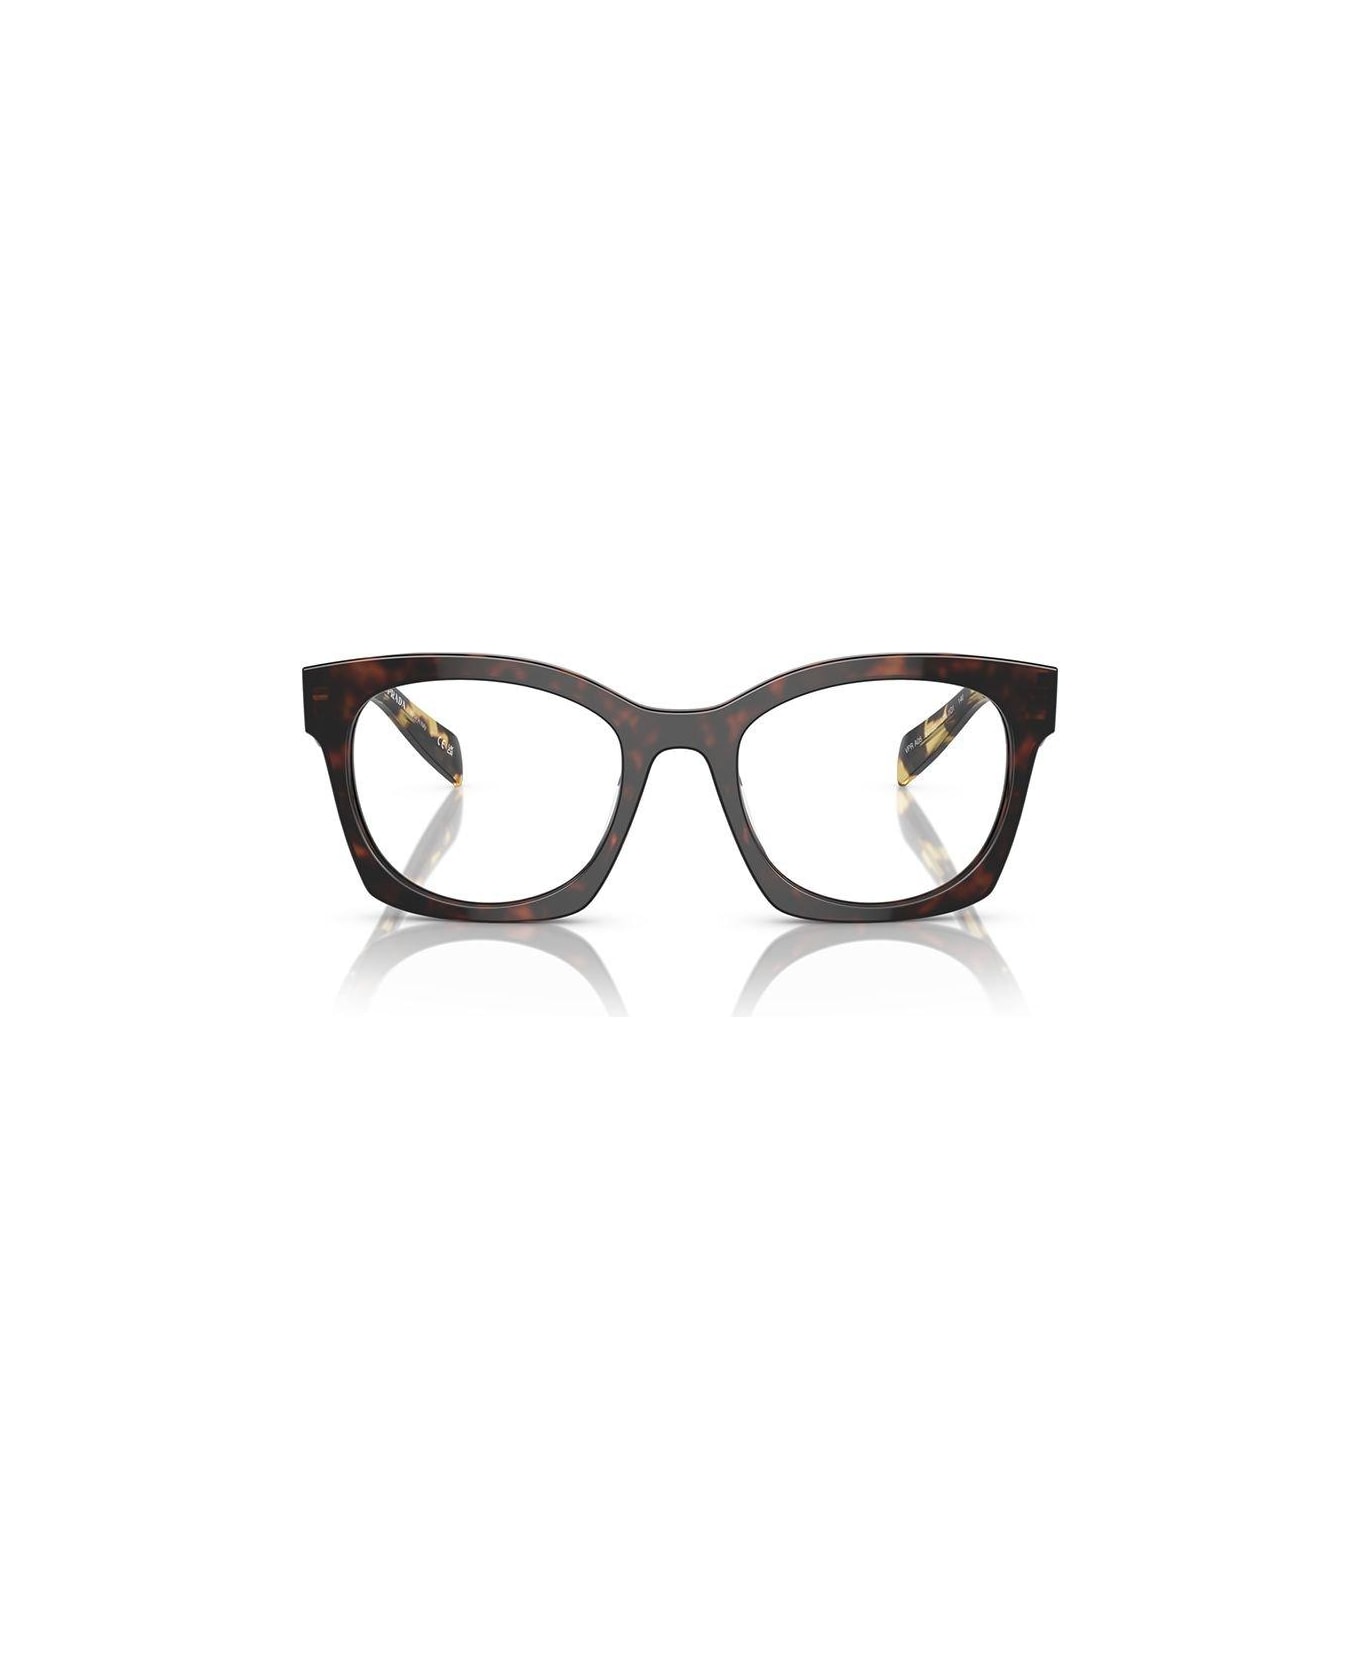 Prada Eyewear D-frame Glasses - 17N1O1